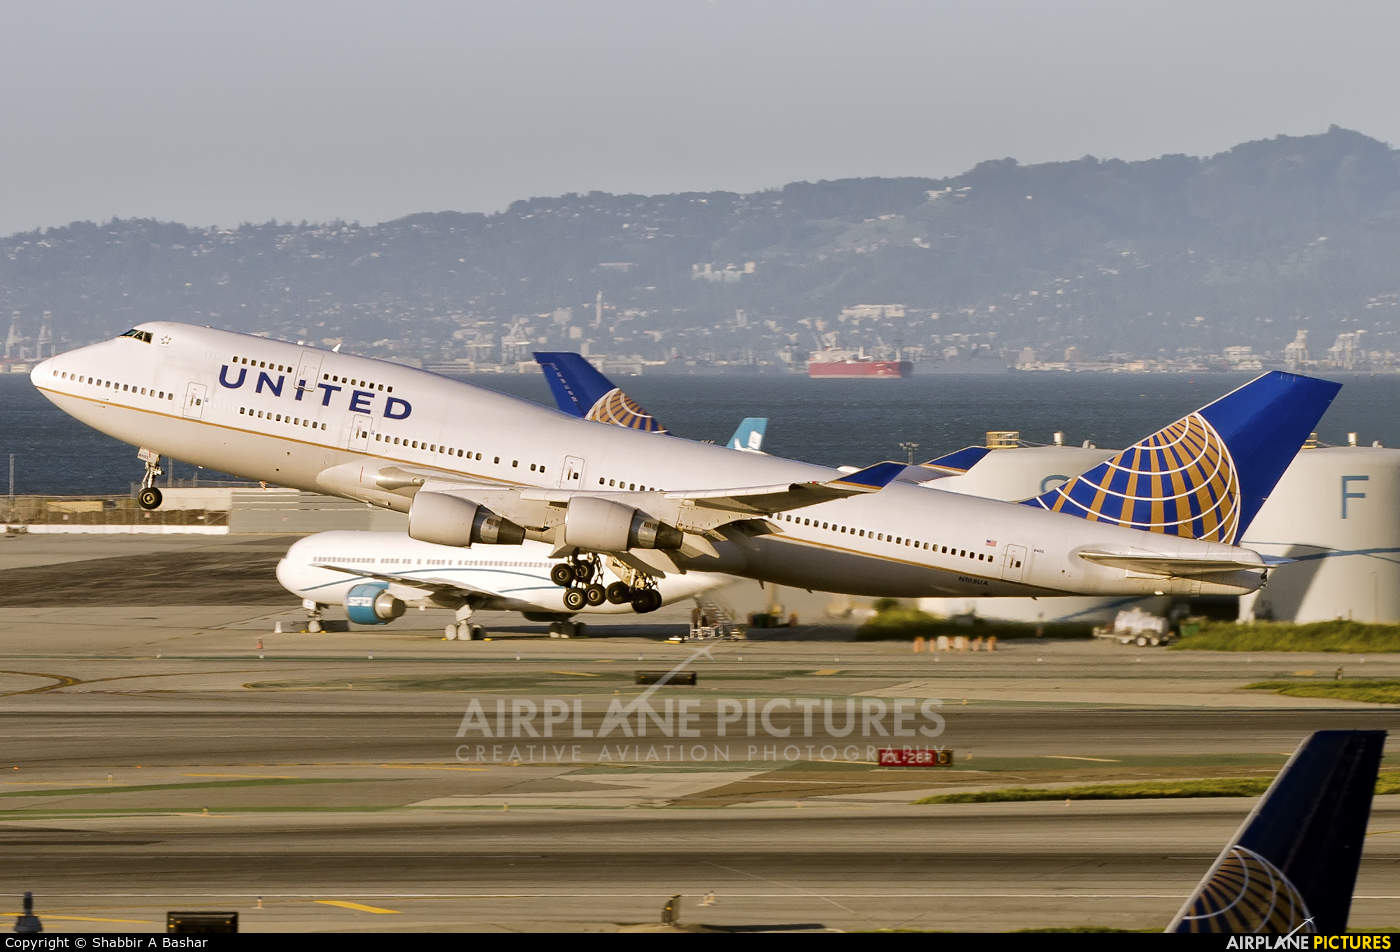 United Airlines pilot arrested for owning bordels